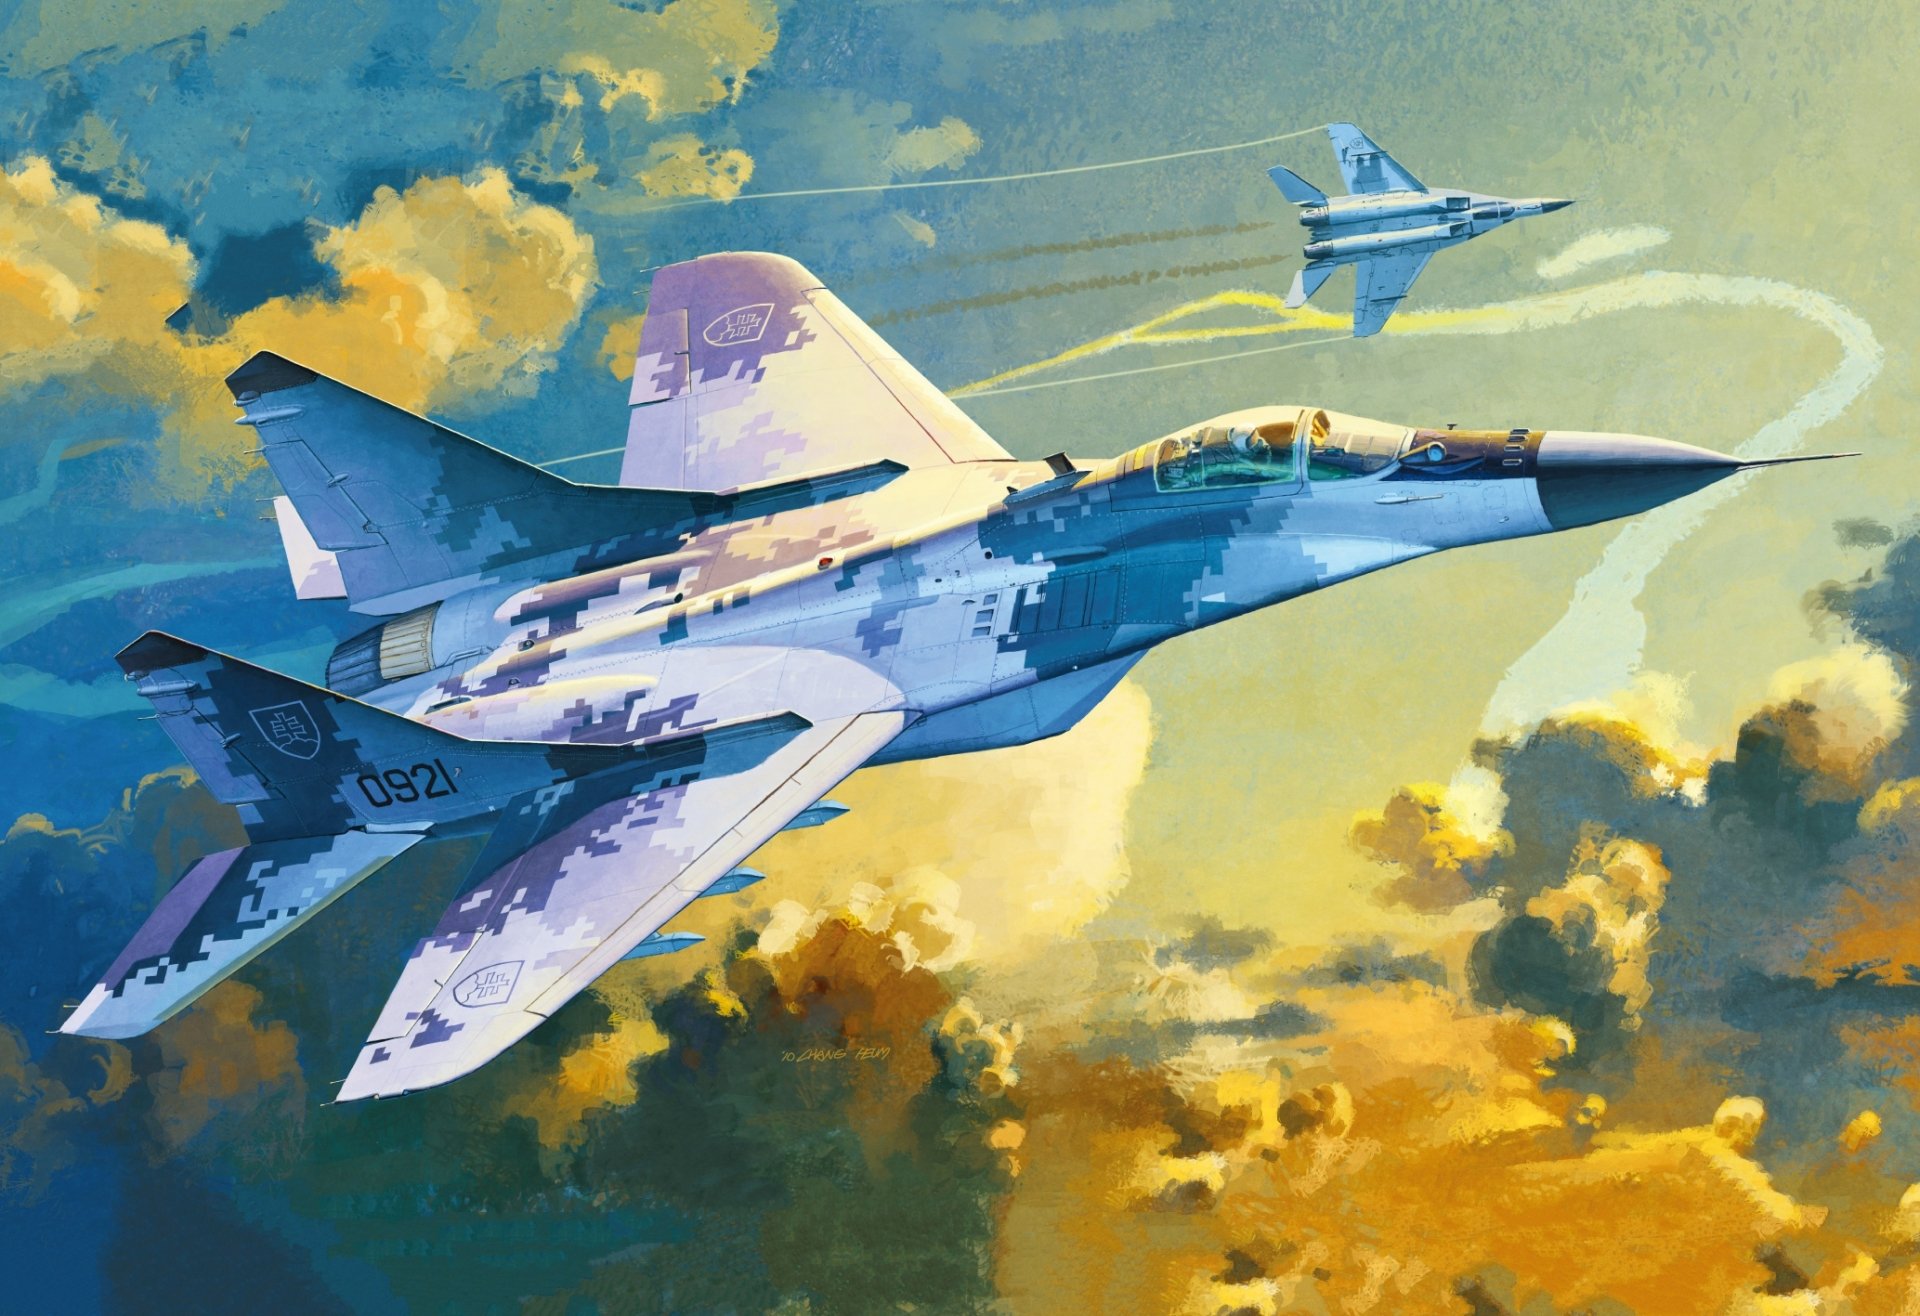 General 1920x1316 slovak air force artwork Mikoyan MiG-29 military aircraft aircraft Mikoyan-Gurevich Russian/Soviet aircraft